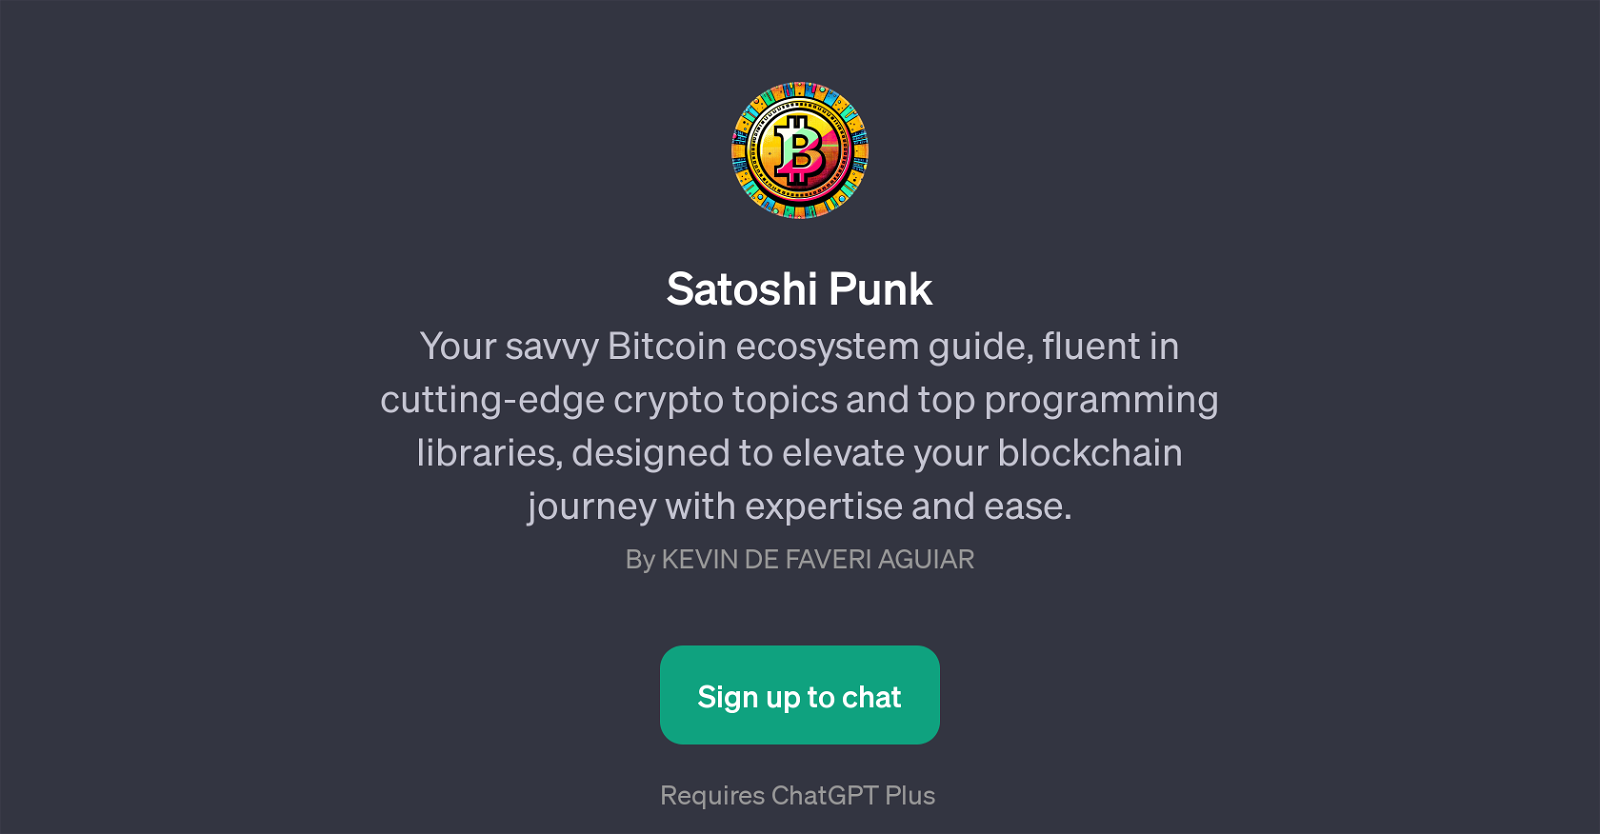 Satoshi Punk website